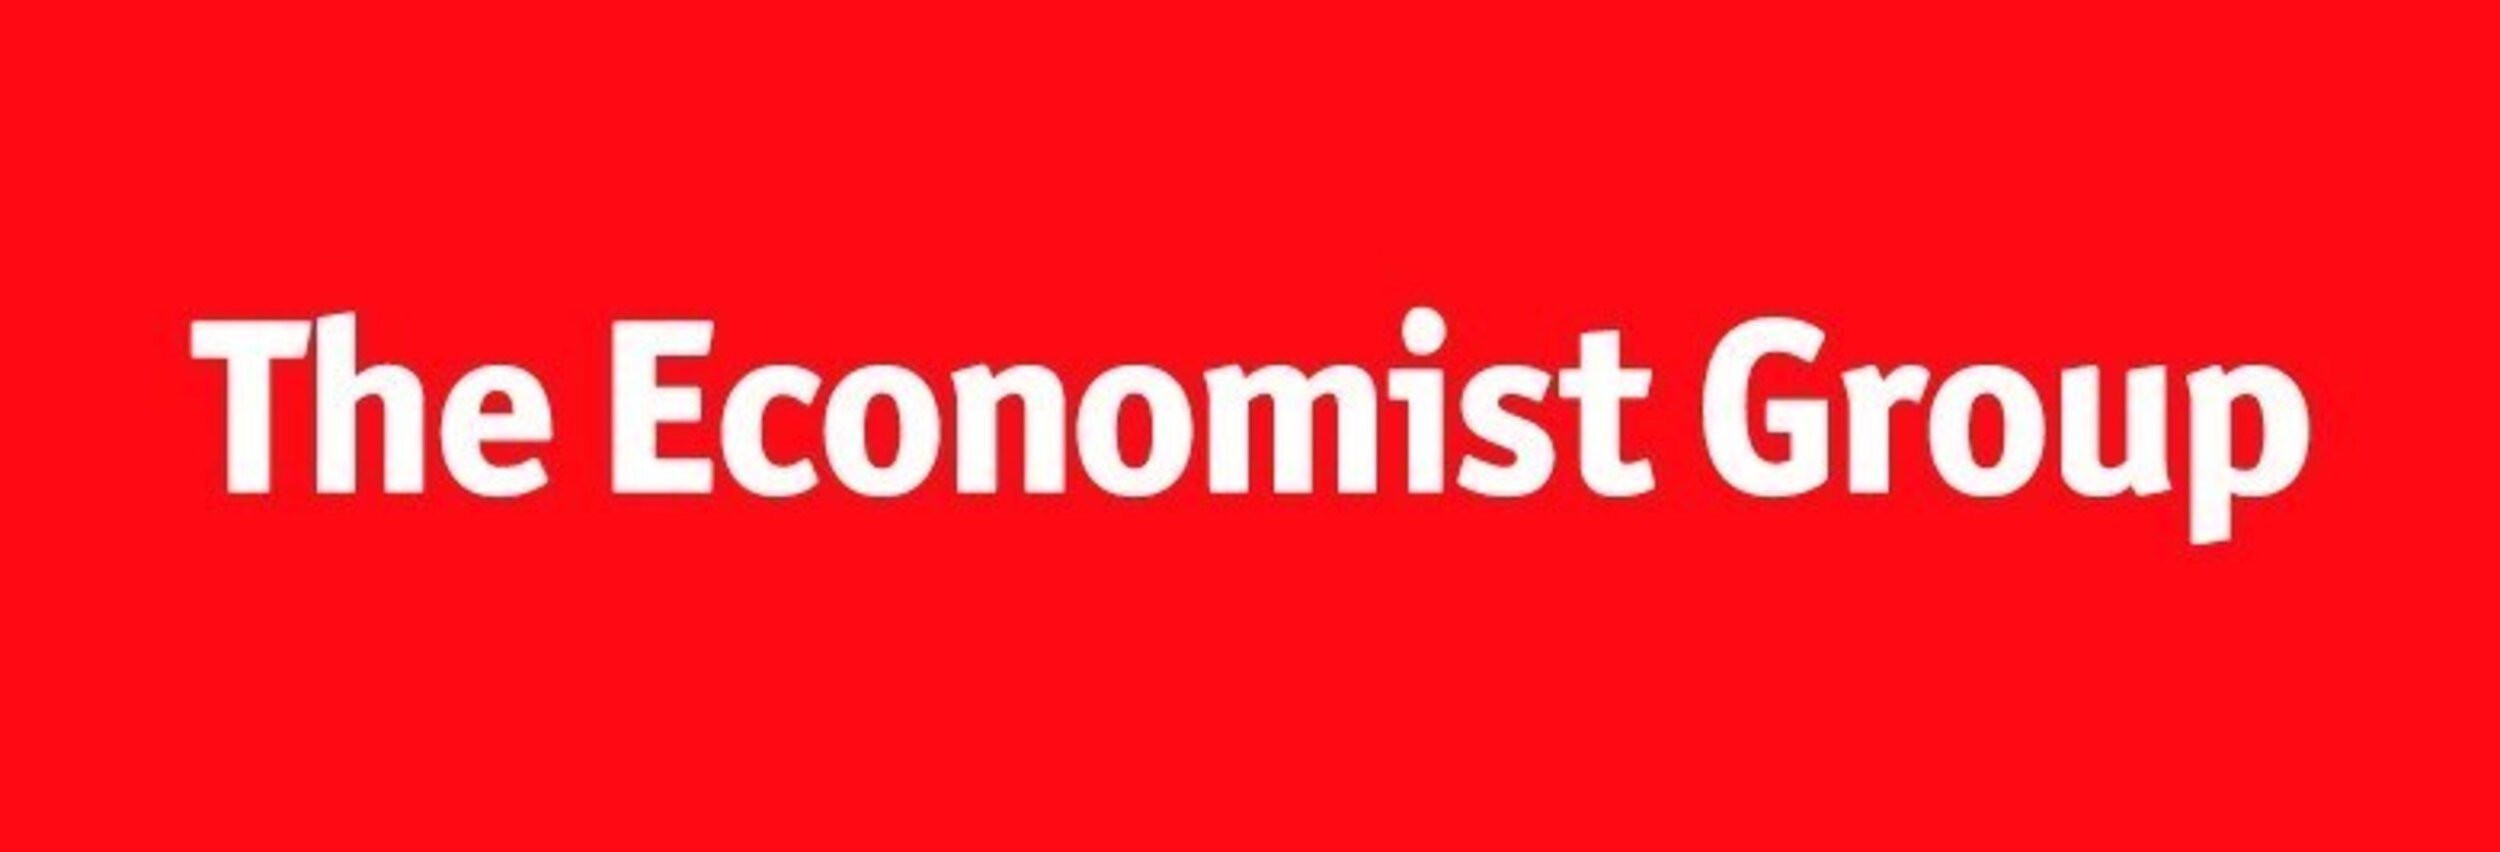 The Economist Group.jpg